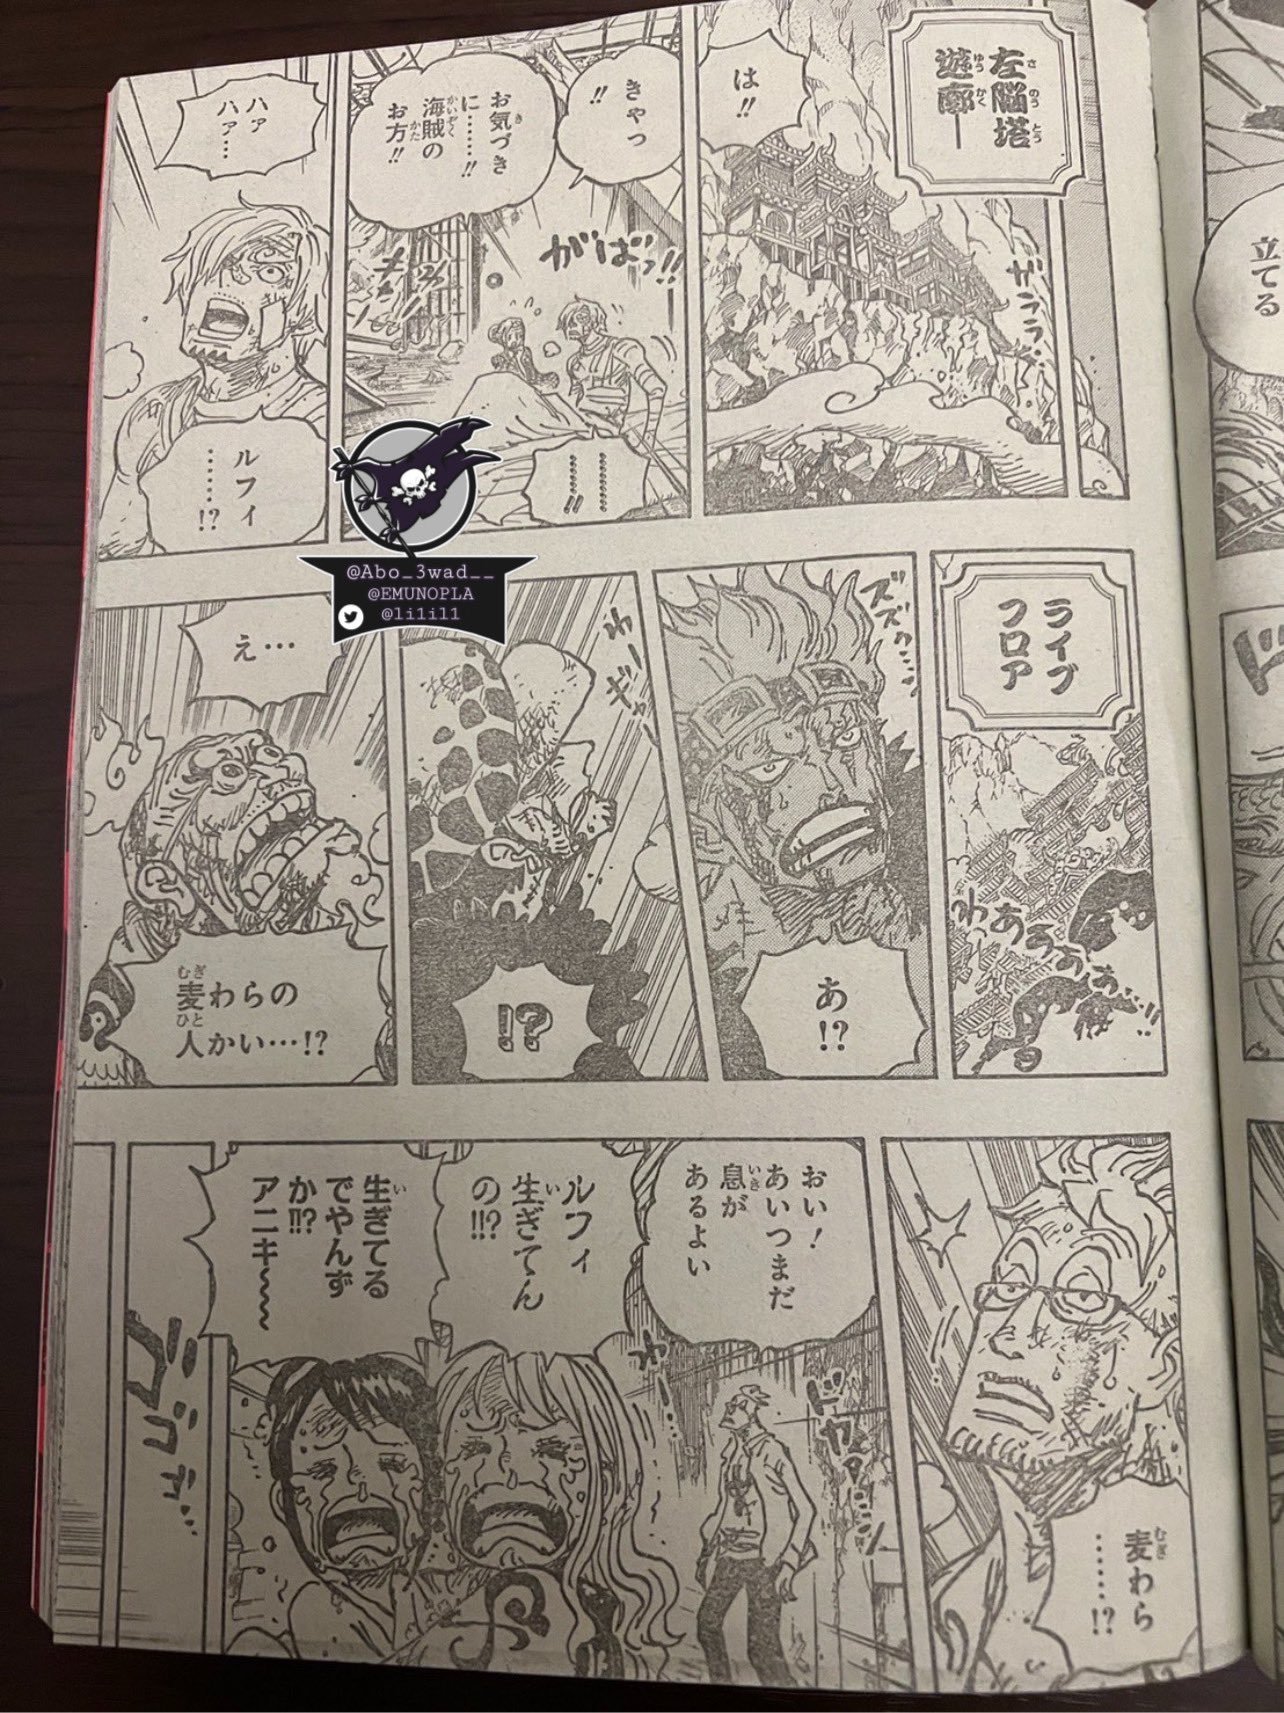 CAPITULAZO!, La Hito Hito no mi modelo nika, One Piece 1044, Manga 1044 